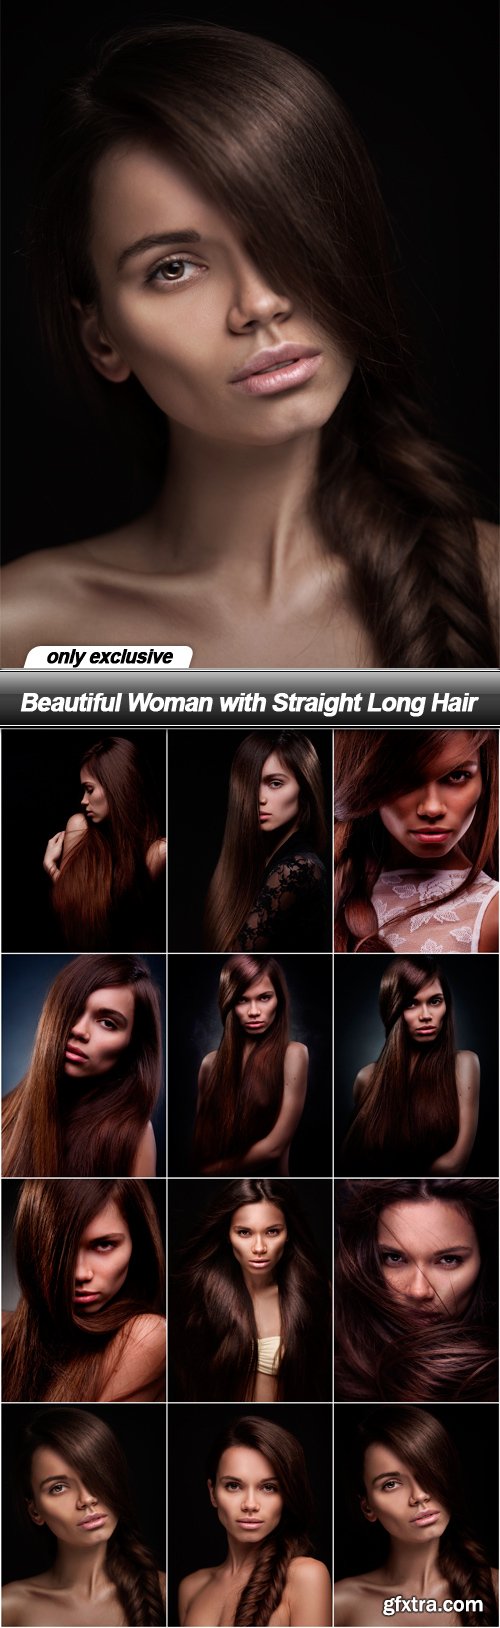 Beautiful Woman with Straight Long Hair - 12 UHQ JPEG